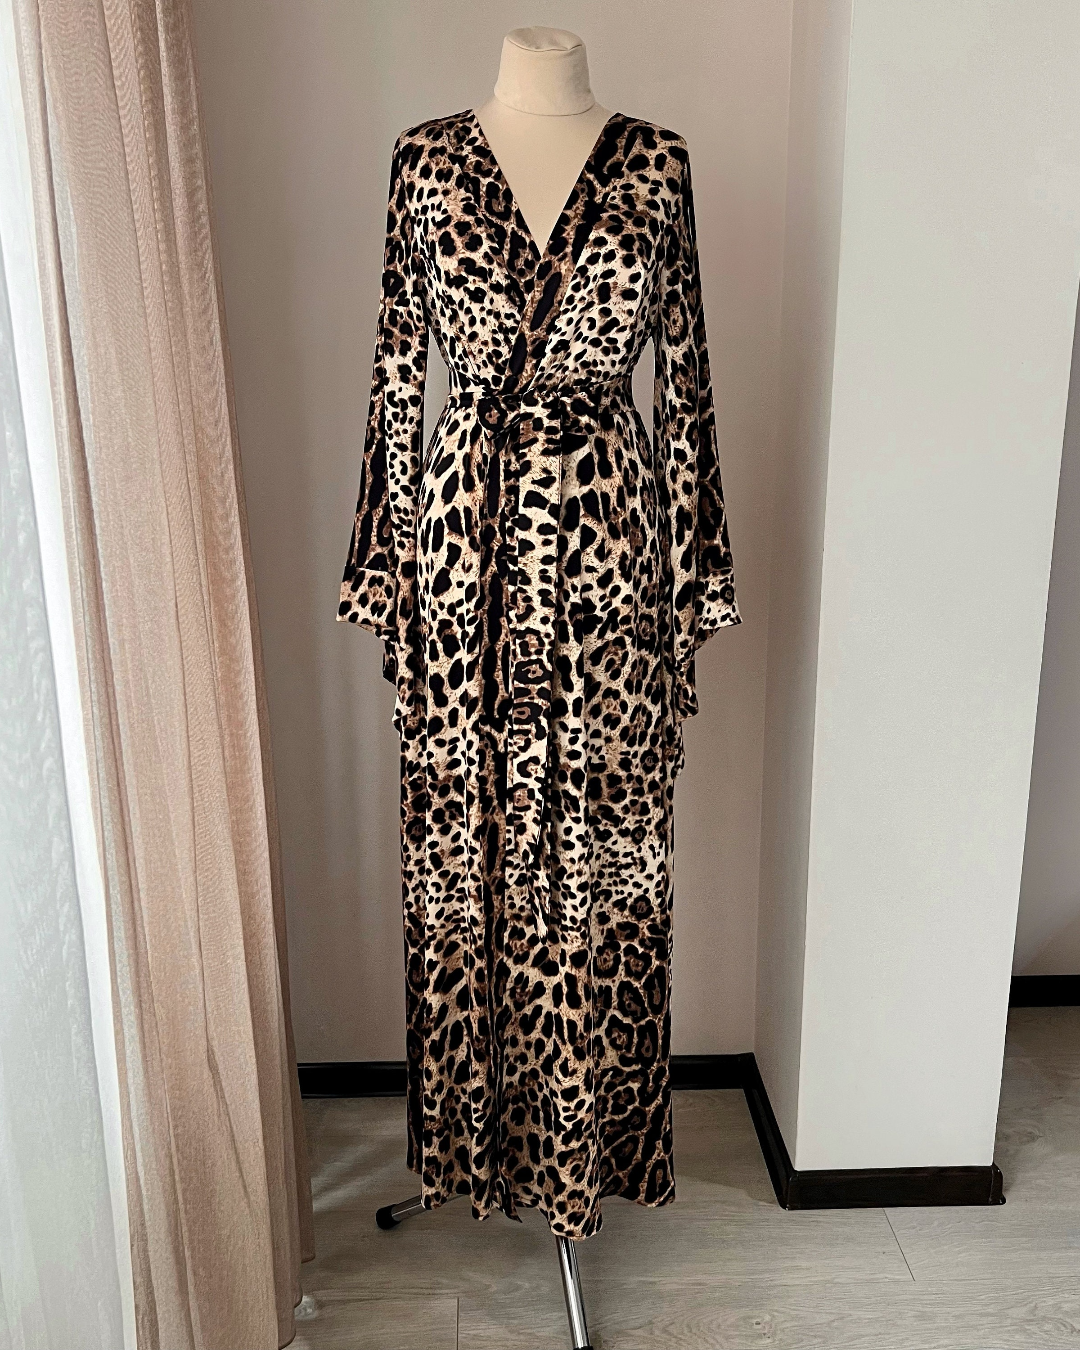 a leopard print dress on a mannequin